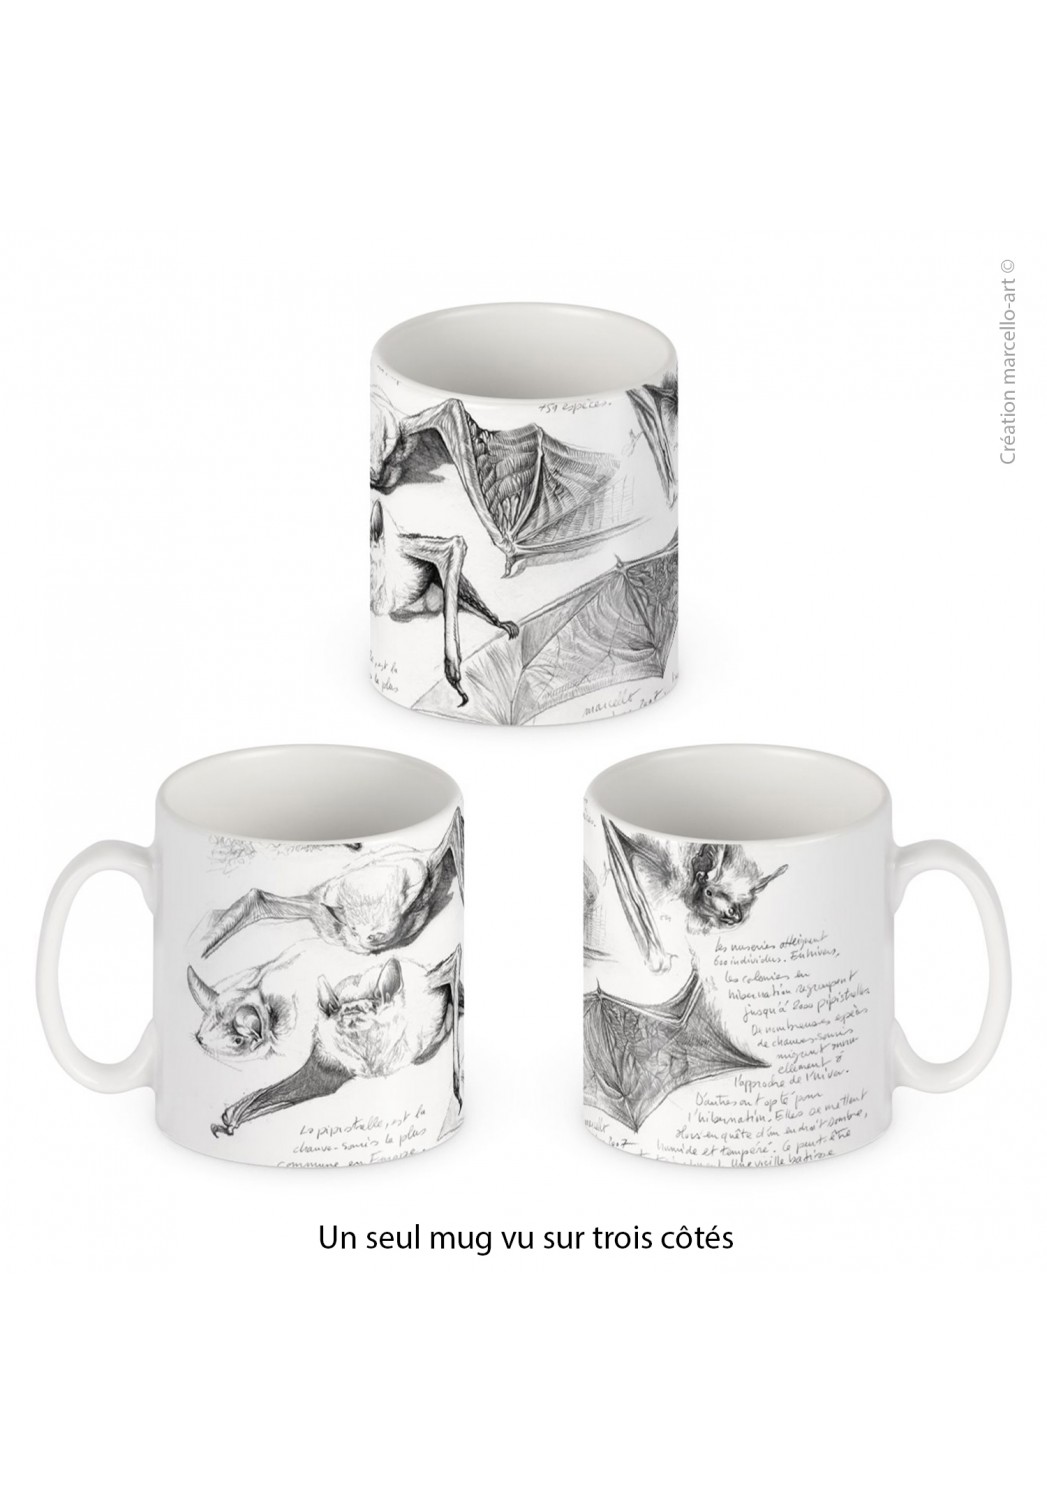 Marcello-art: Decoration accessoiries Porcelain mug 31 pipistrelle white